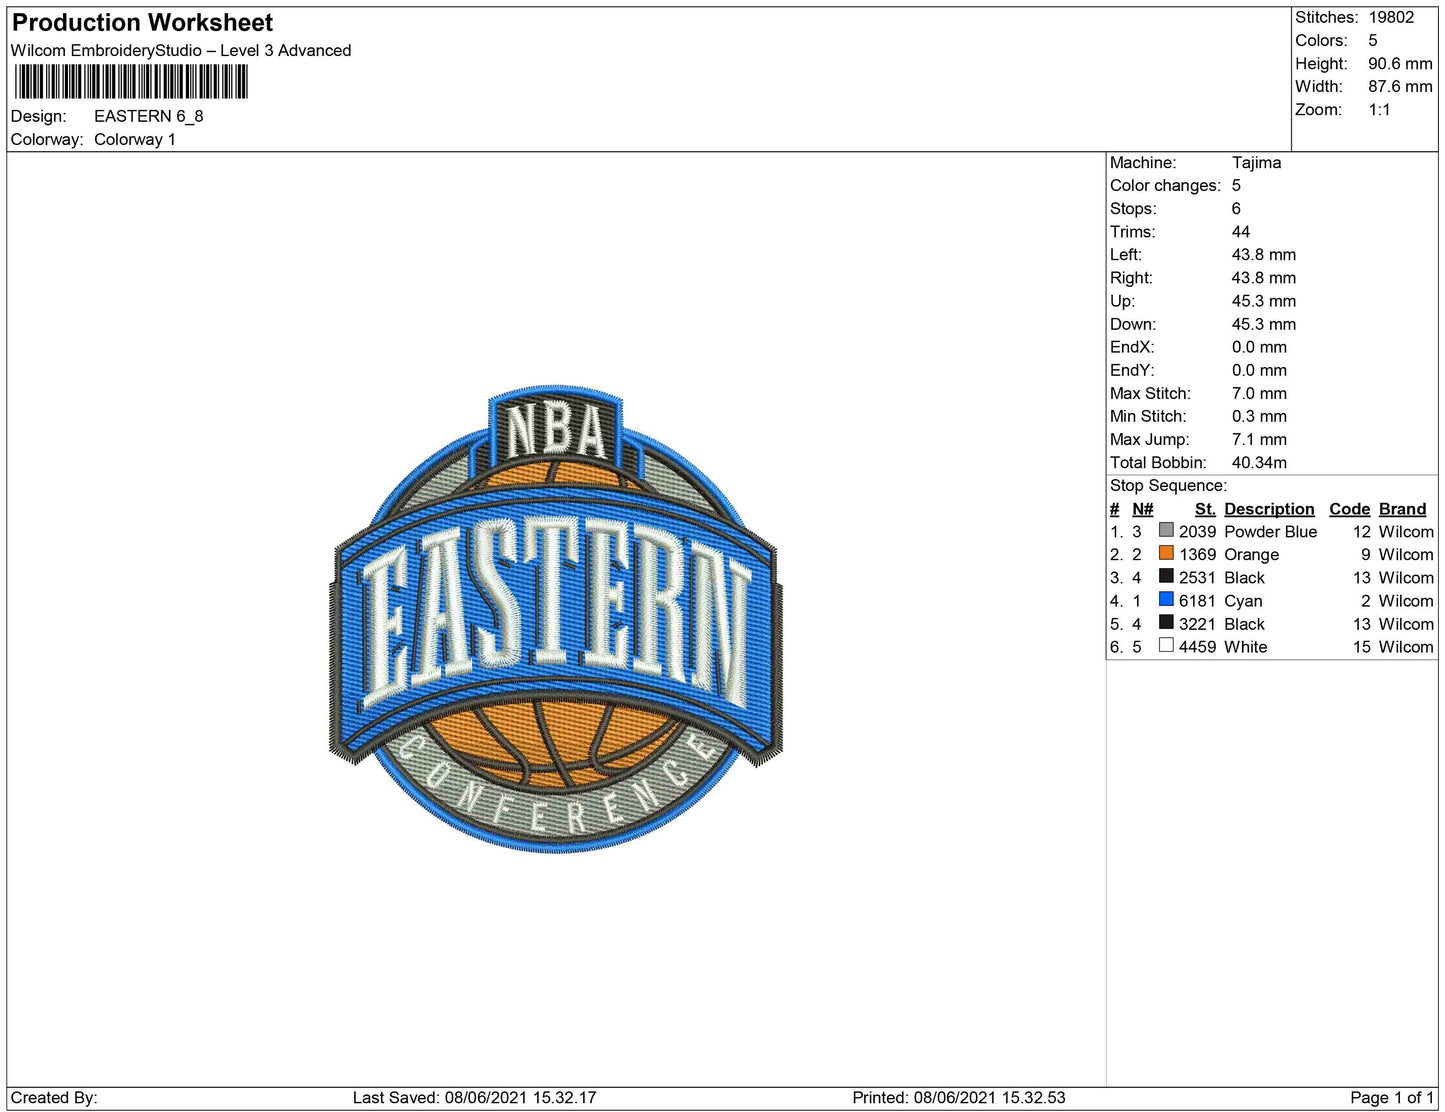 NBA Eastern confrence